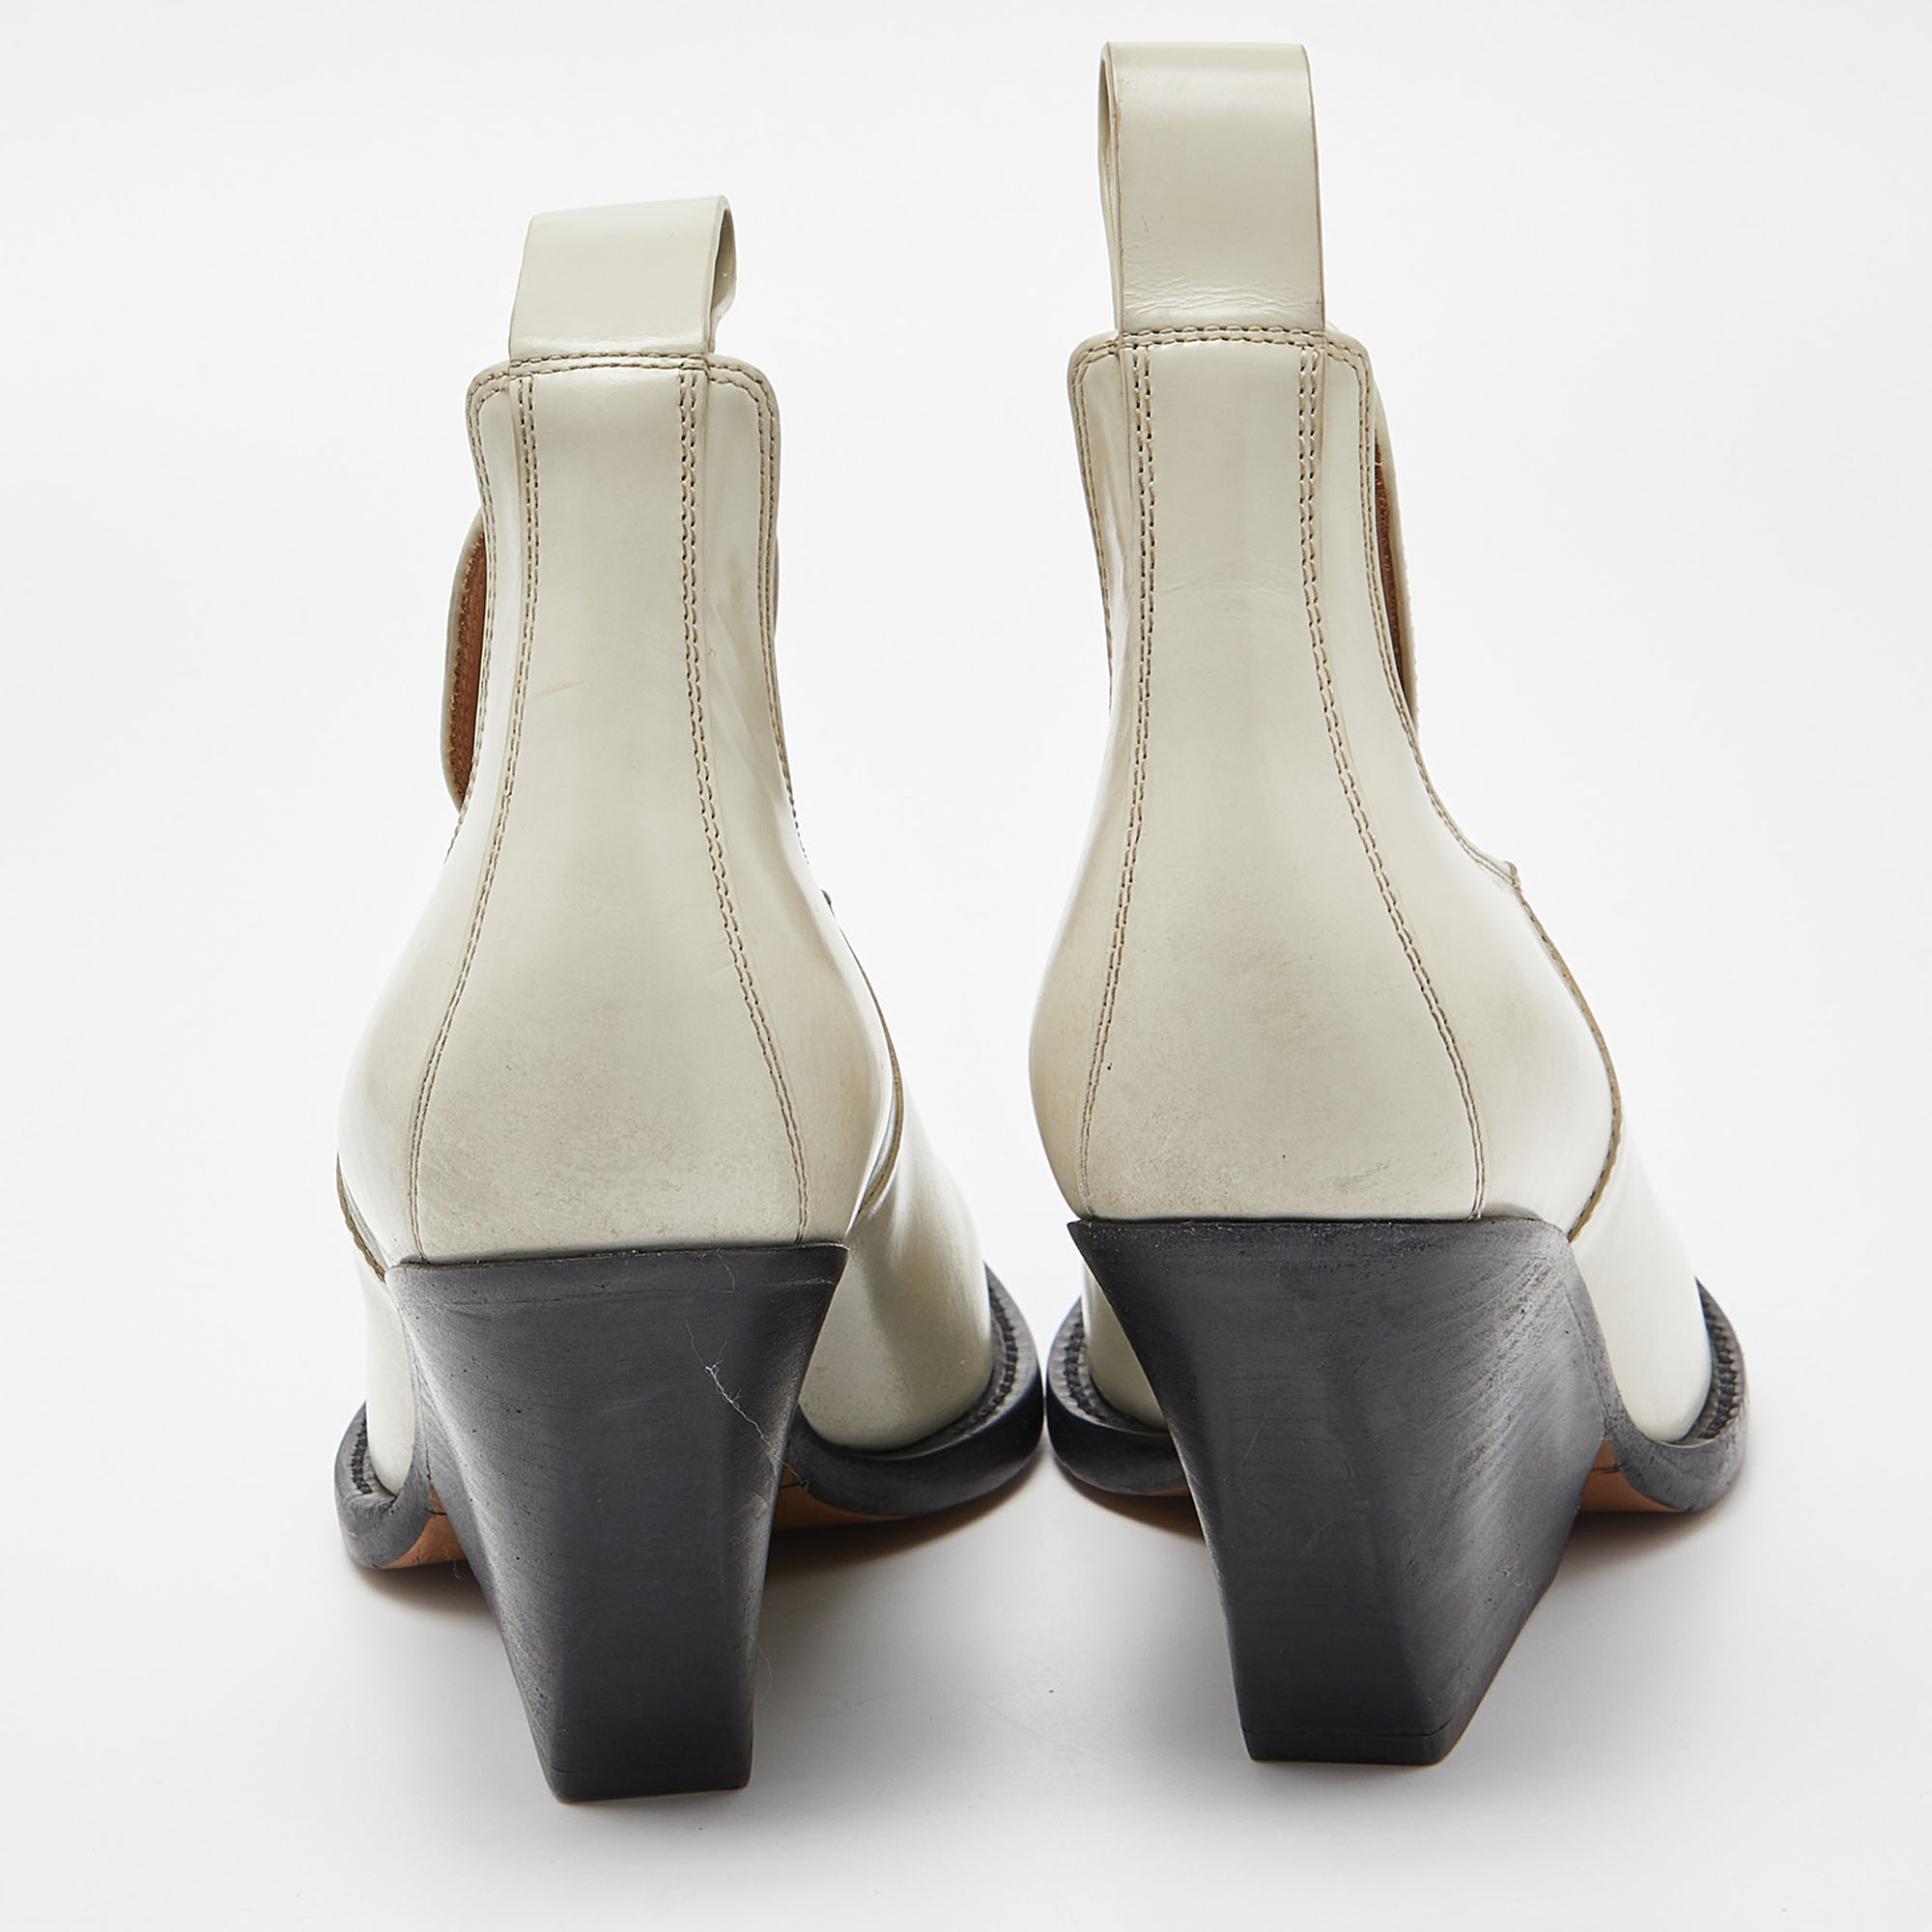 Bottega Veneta Off White Leather Lean Ankle Boots Size 38